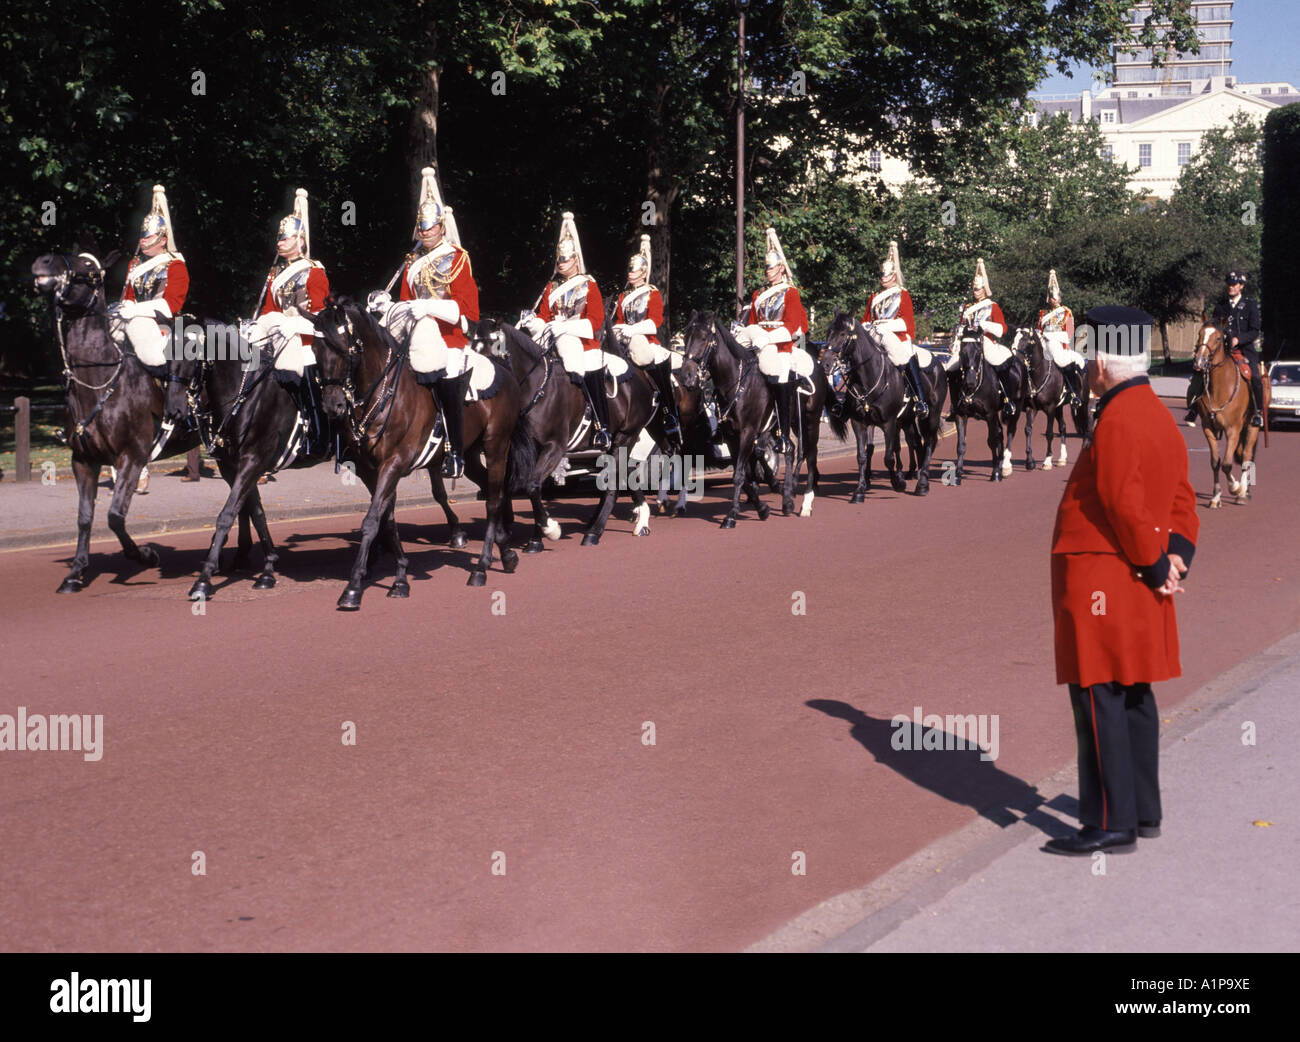 Household Cavalry Mounted Regiment Life Guards Troopers che arrivano al Horse Guards Parade Ground guardato dal pensionato Chelsea in uniforme Londra Inghilterra Foto Stock